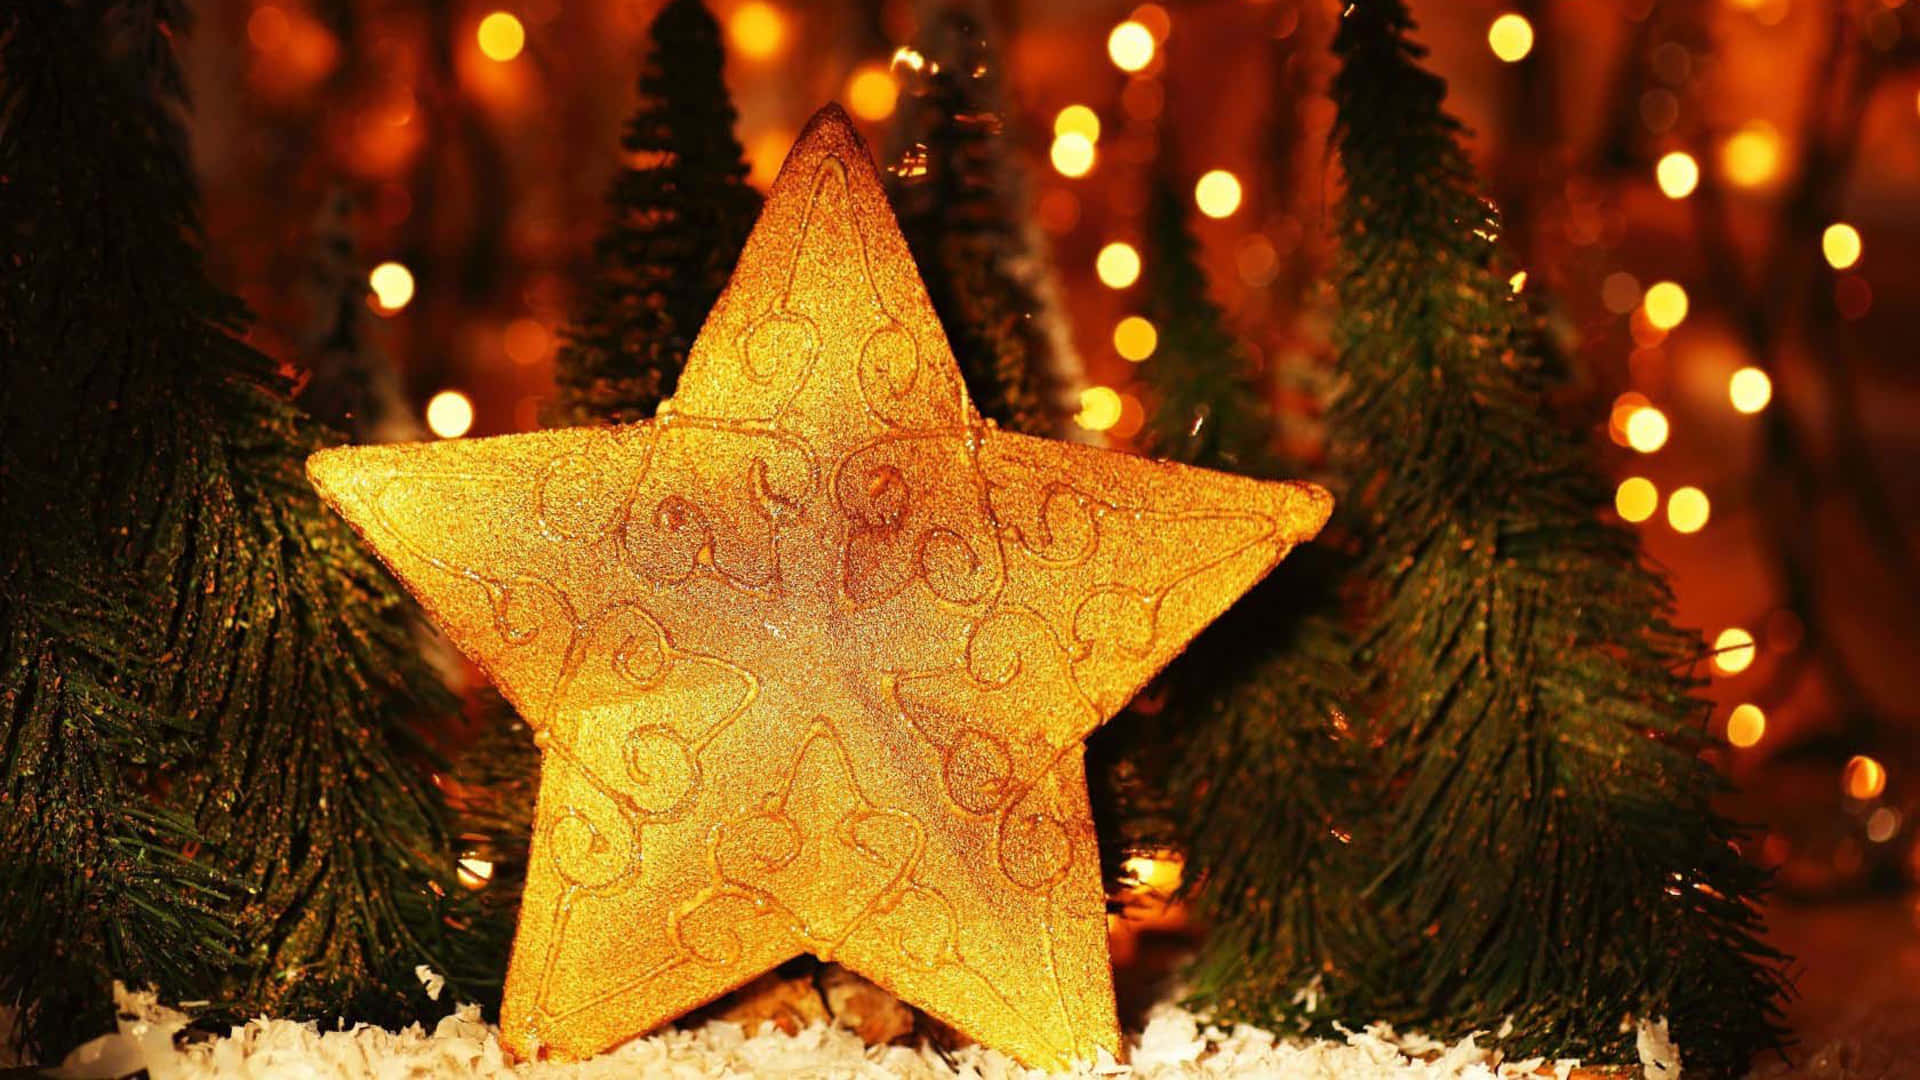 An illuminated Christmas star overlooking a sleepy winter town. Wallpaper